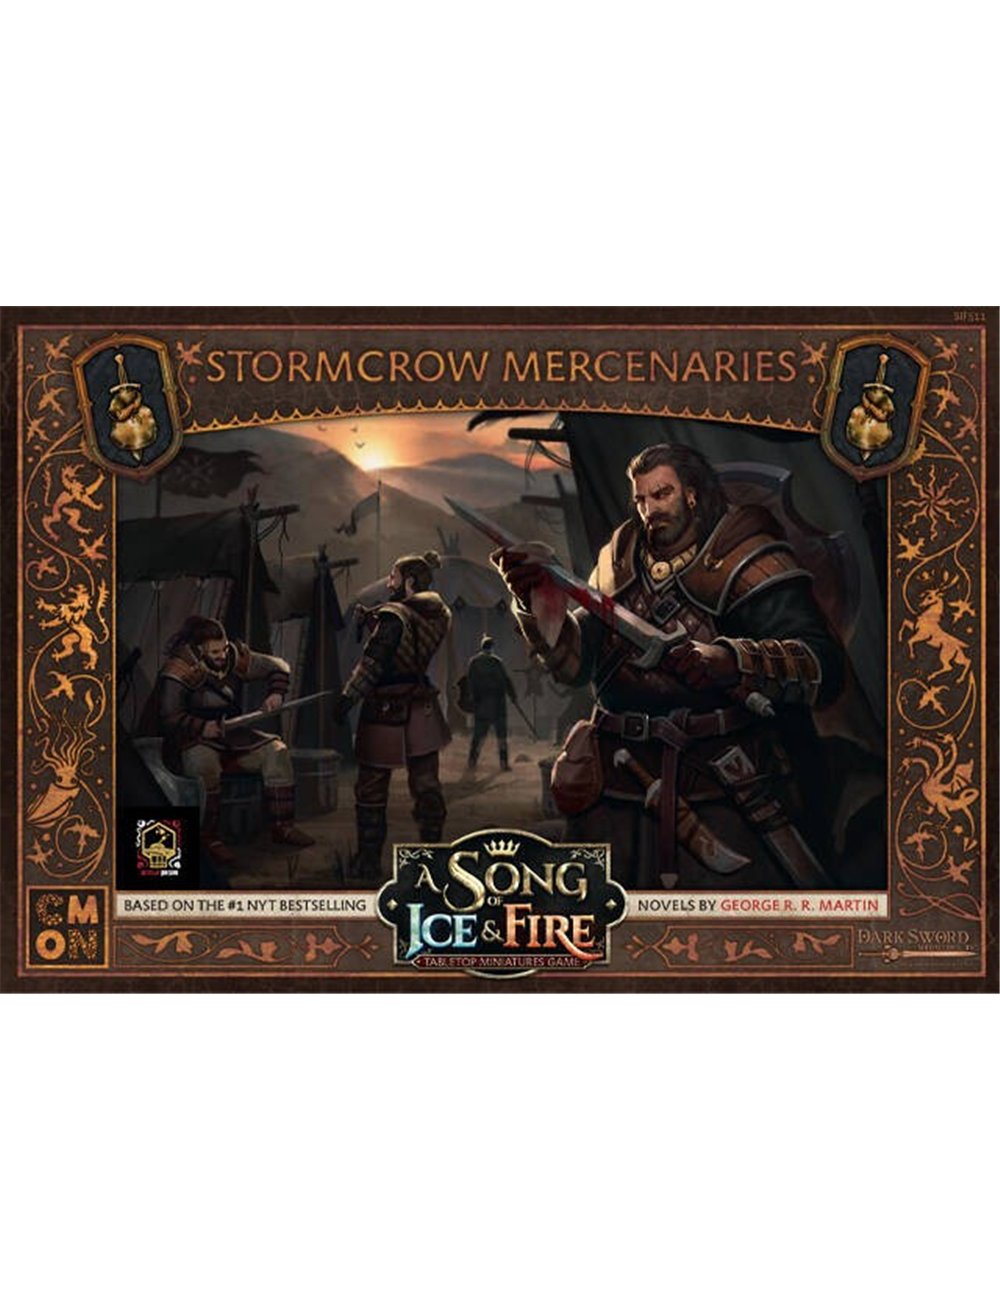 A SONG OF ICE & FIRE - Stormcrow Mercenaries PL